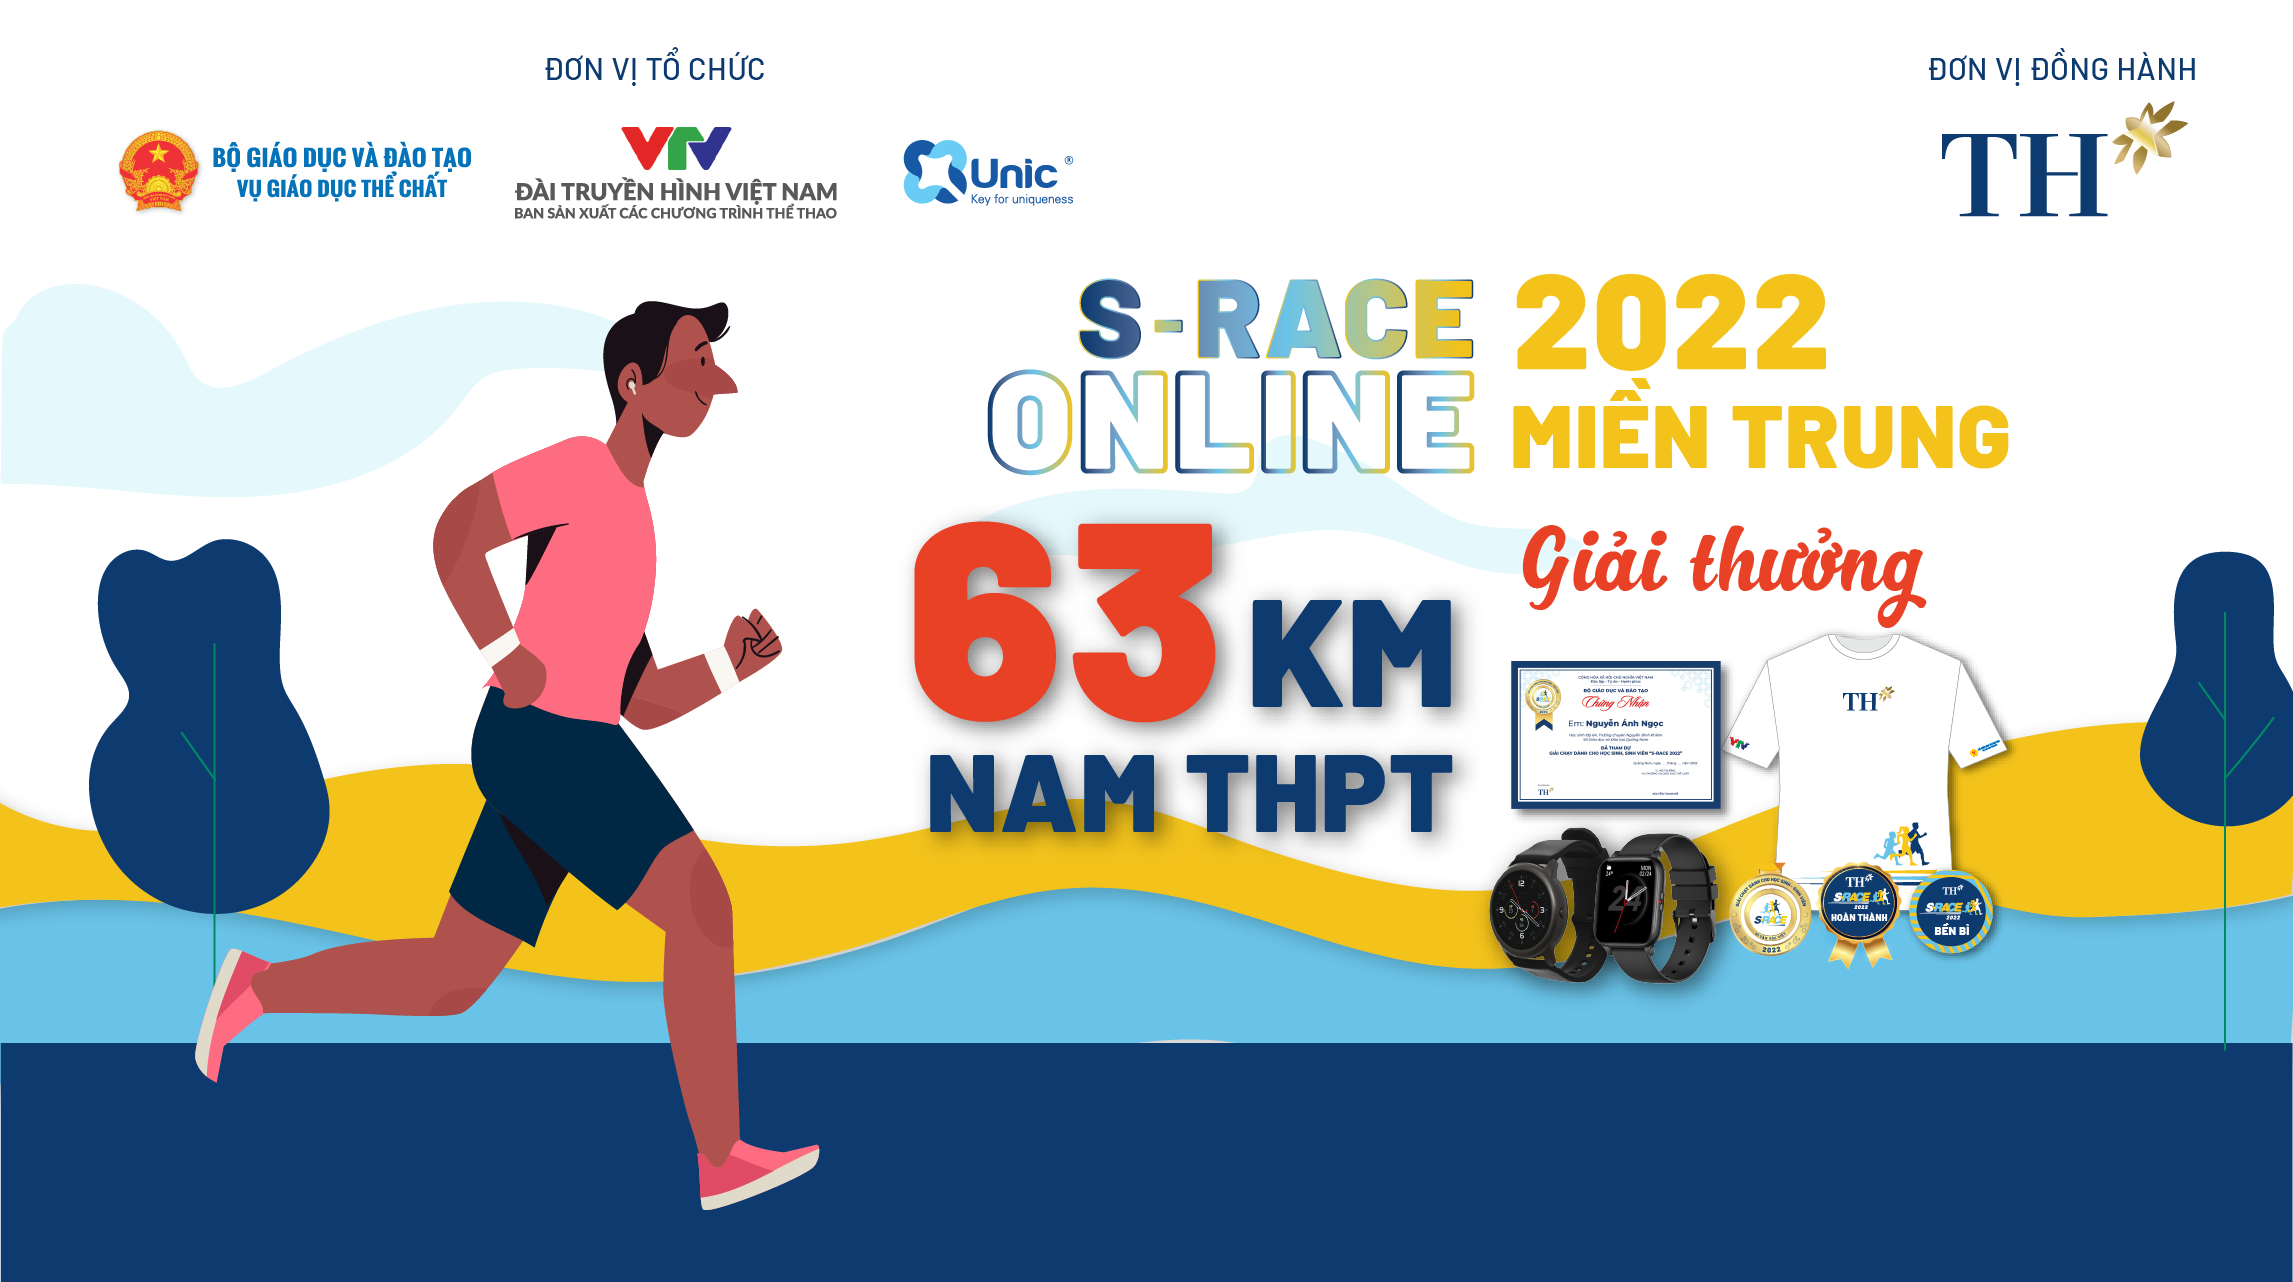 63 KM NAM THPT (S-Race Online miền Trung) - Unlimited Chain